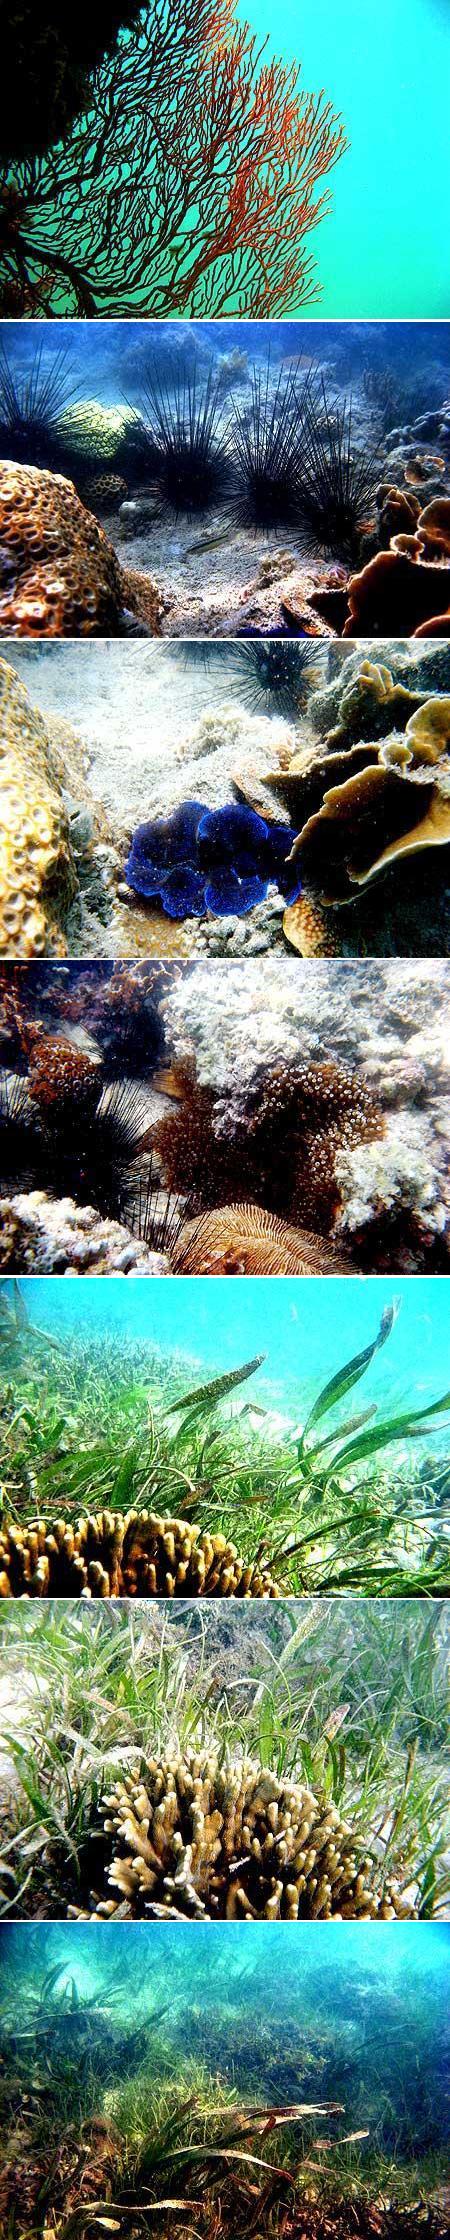 Terumbu karang (coral reef), padang lamun (seagrass bed), bulu babi (diaderma sp.), dan makro alga di pulau Ketawai, Bangka, yang kurang baik